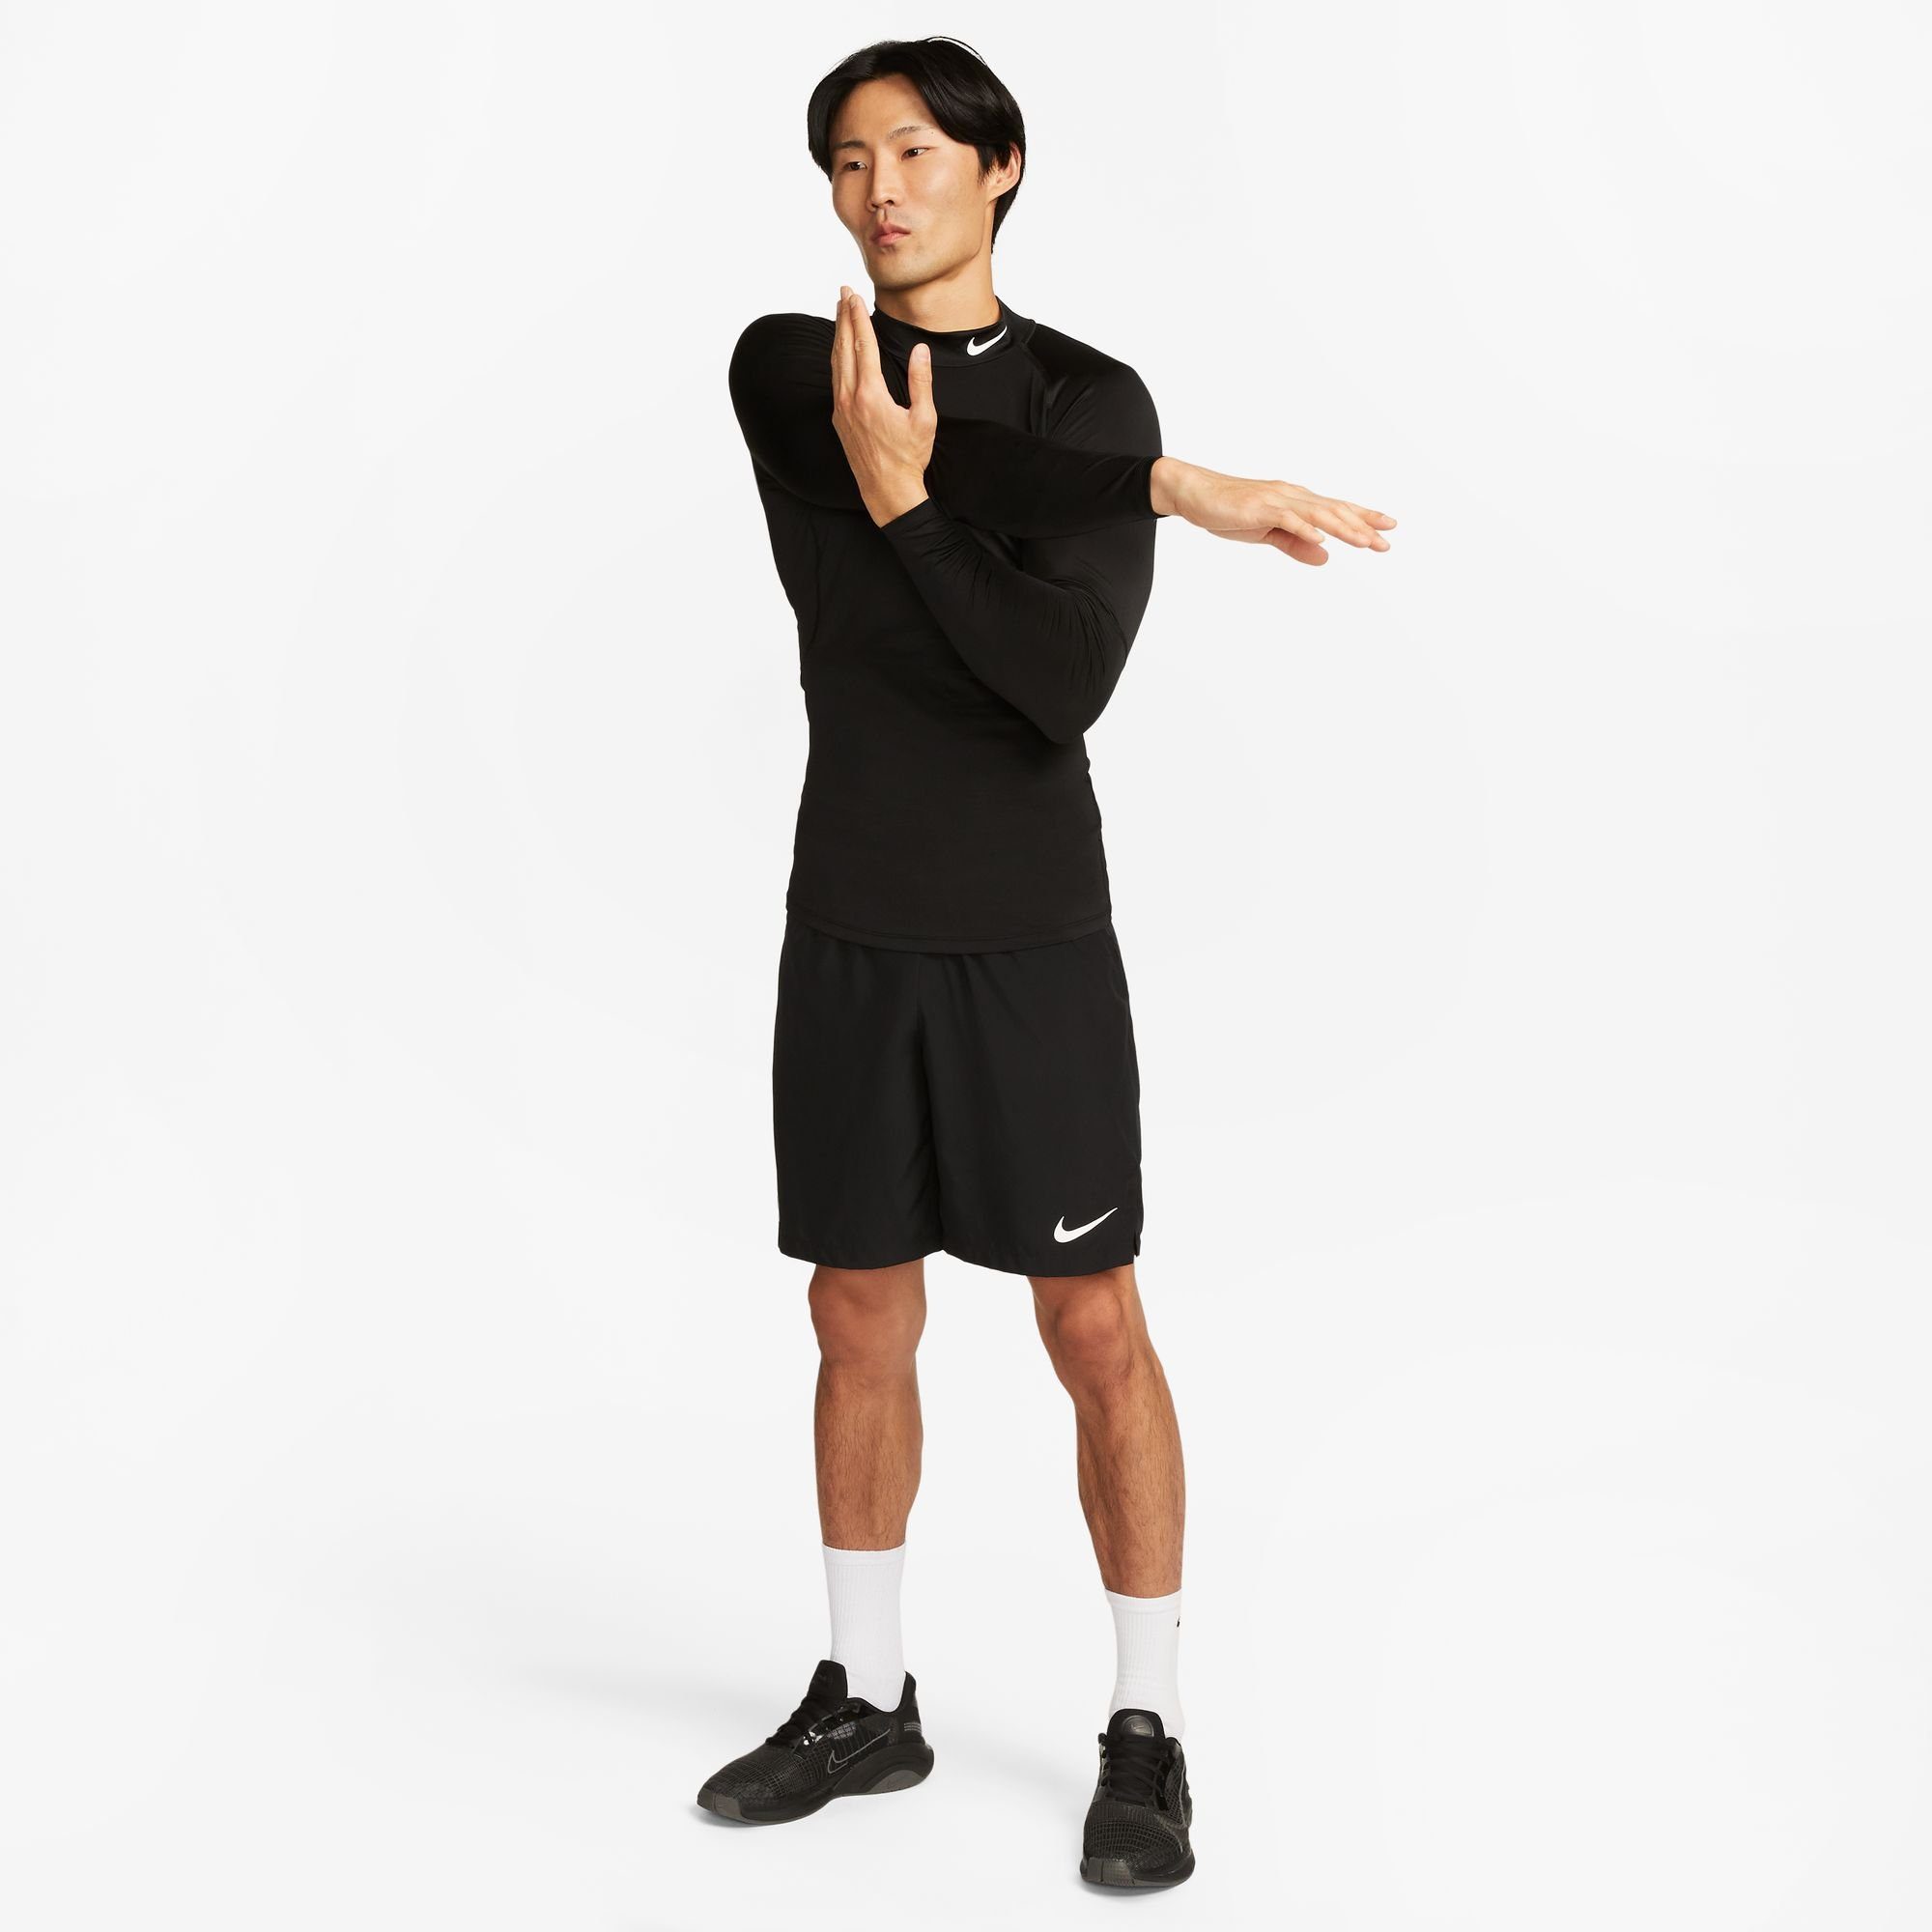 MOCK-NECK PRO DRI-FIT LONG-SLEEVE TOP TIGHT-FITTING Trainingsshirt Nike MEN'S